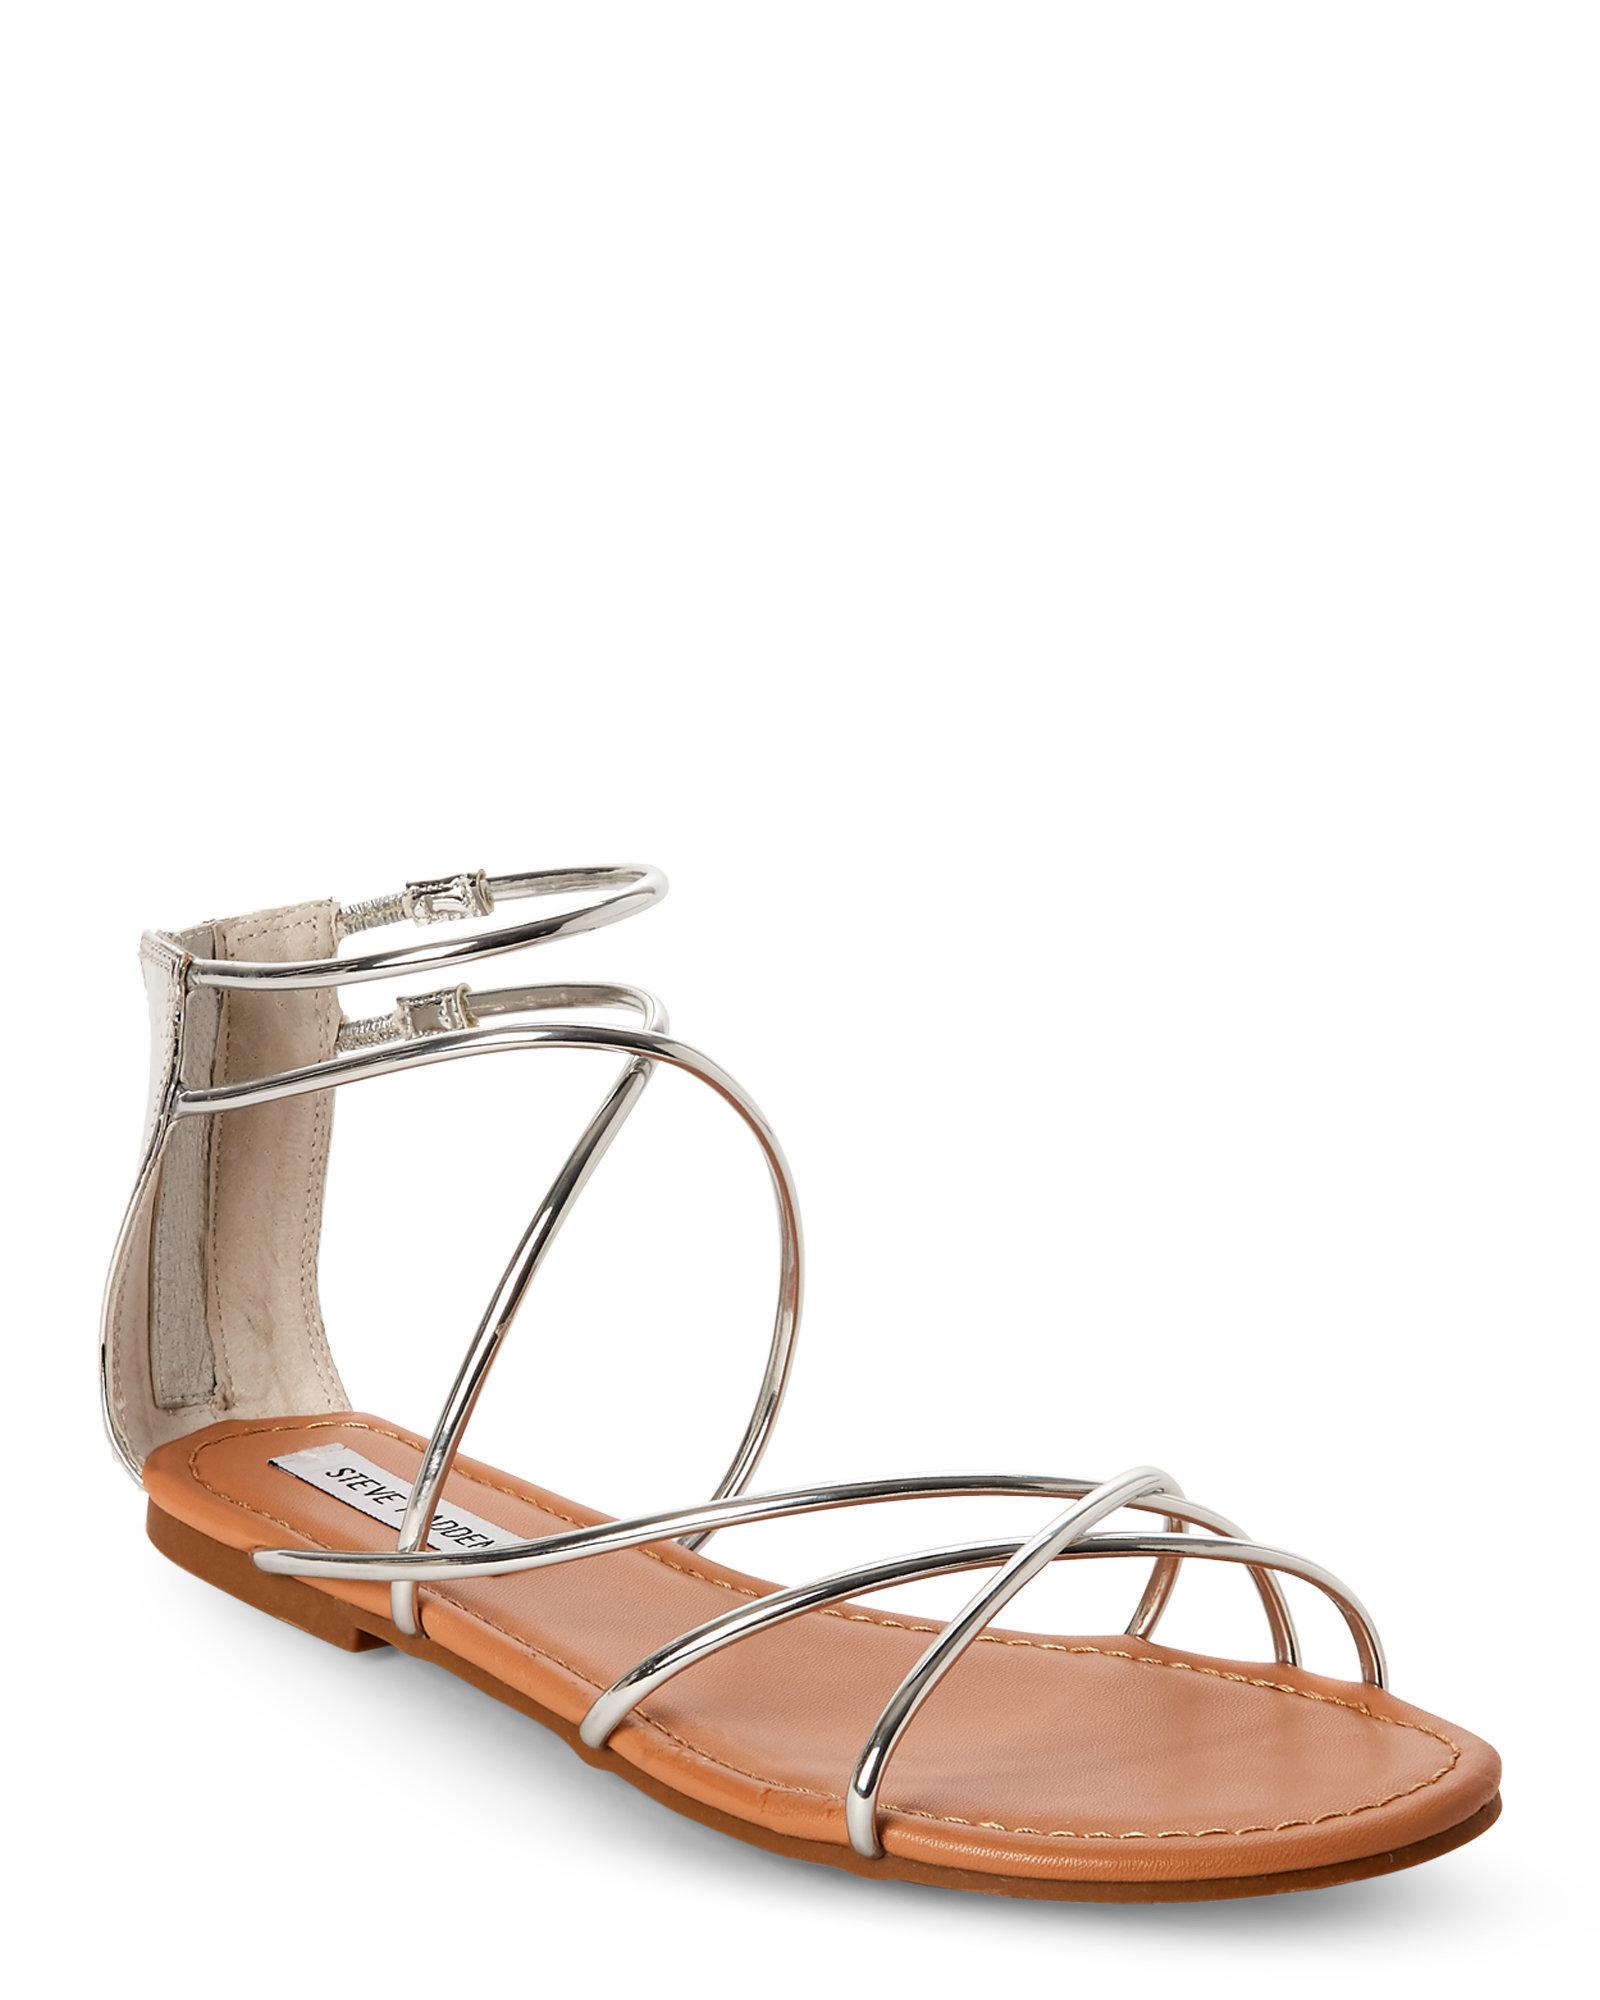 Steve Madden Silver Sapphire Strappy Flat Sandals in Metallic - Lyst